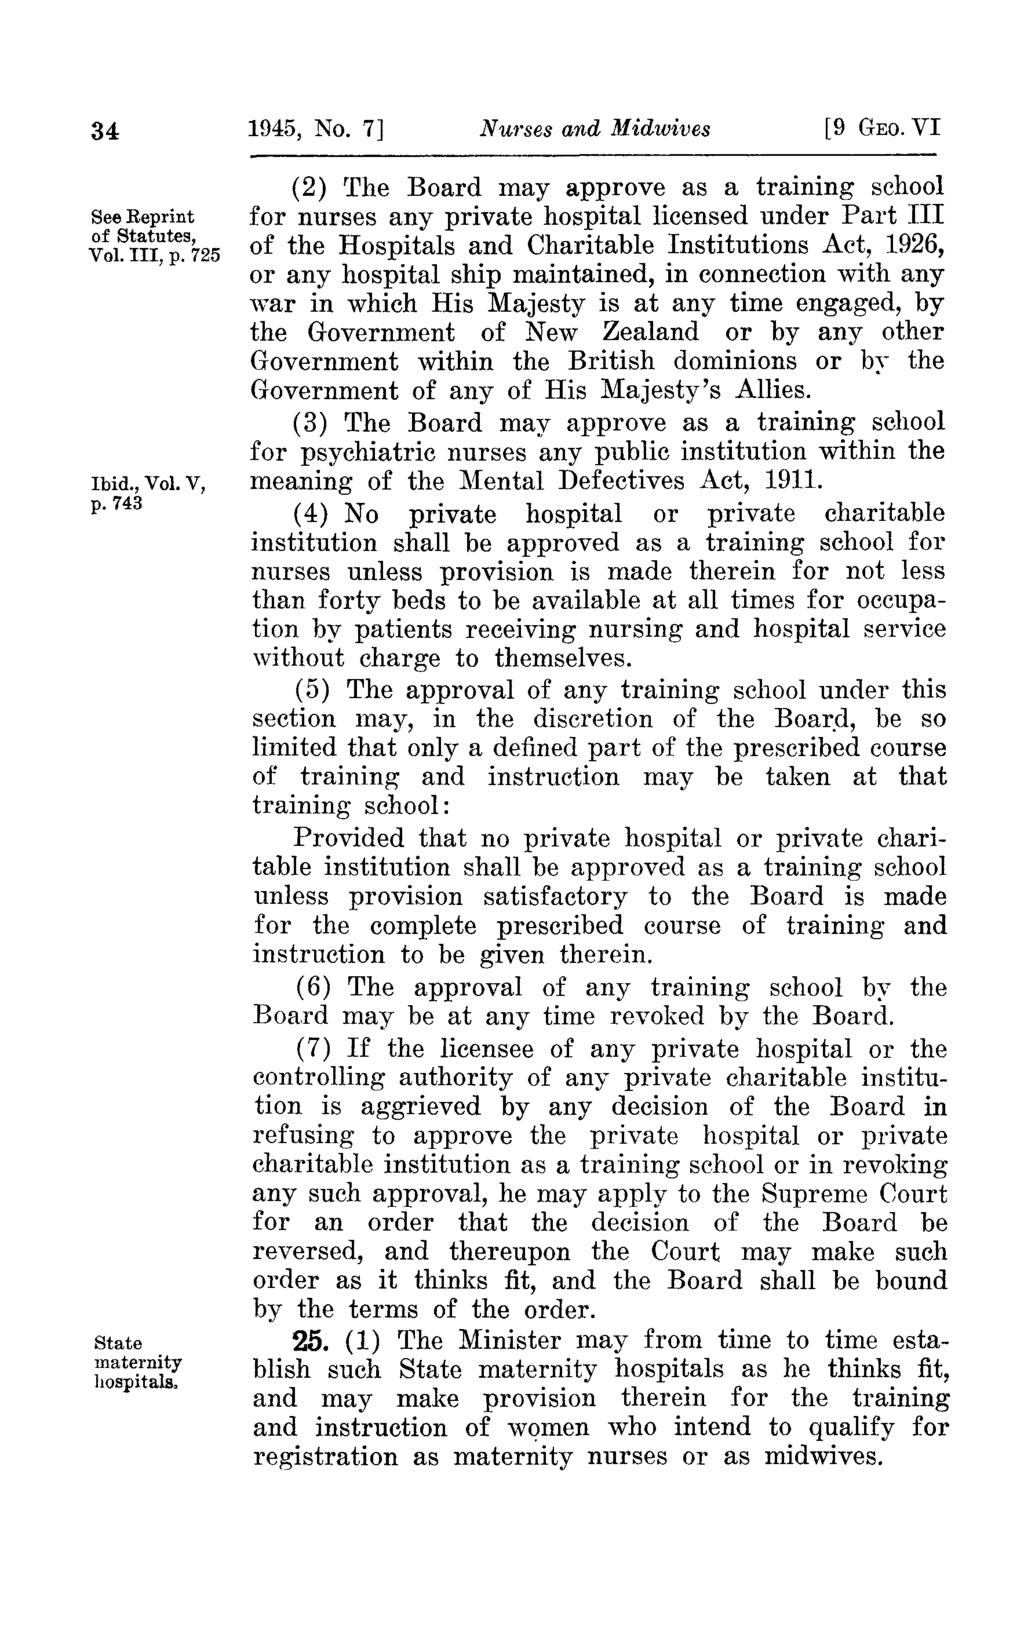 34 See Reprint of Statutes, Vol. Ill, p. 725 Ibid., Vol. V, p.743 State maternity hospitals, 1945, No. 7] Nurses and Midwives [9 GEO.